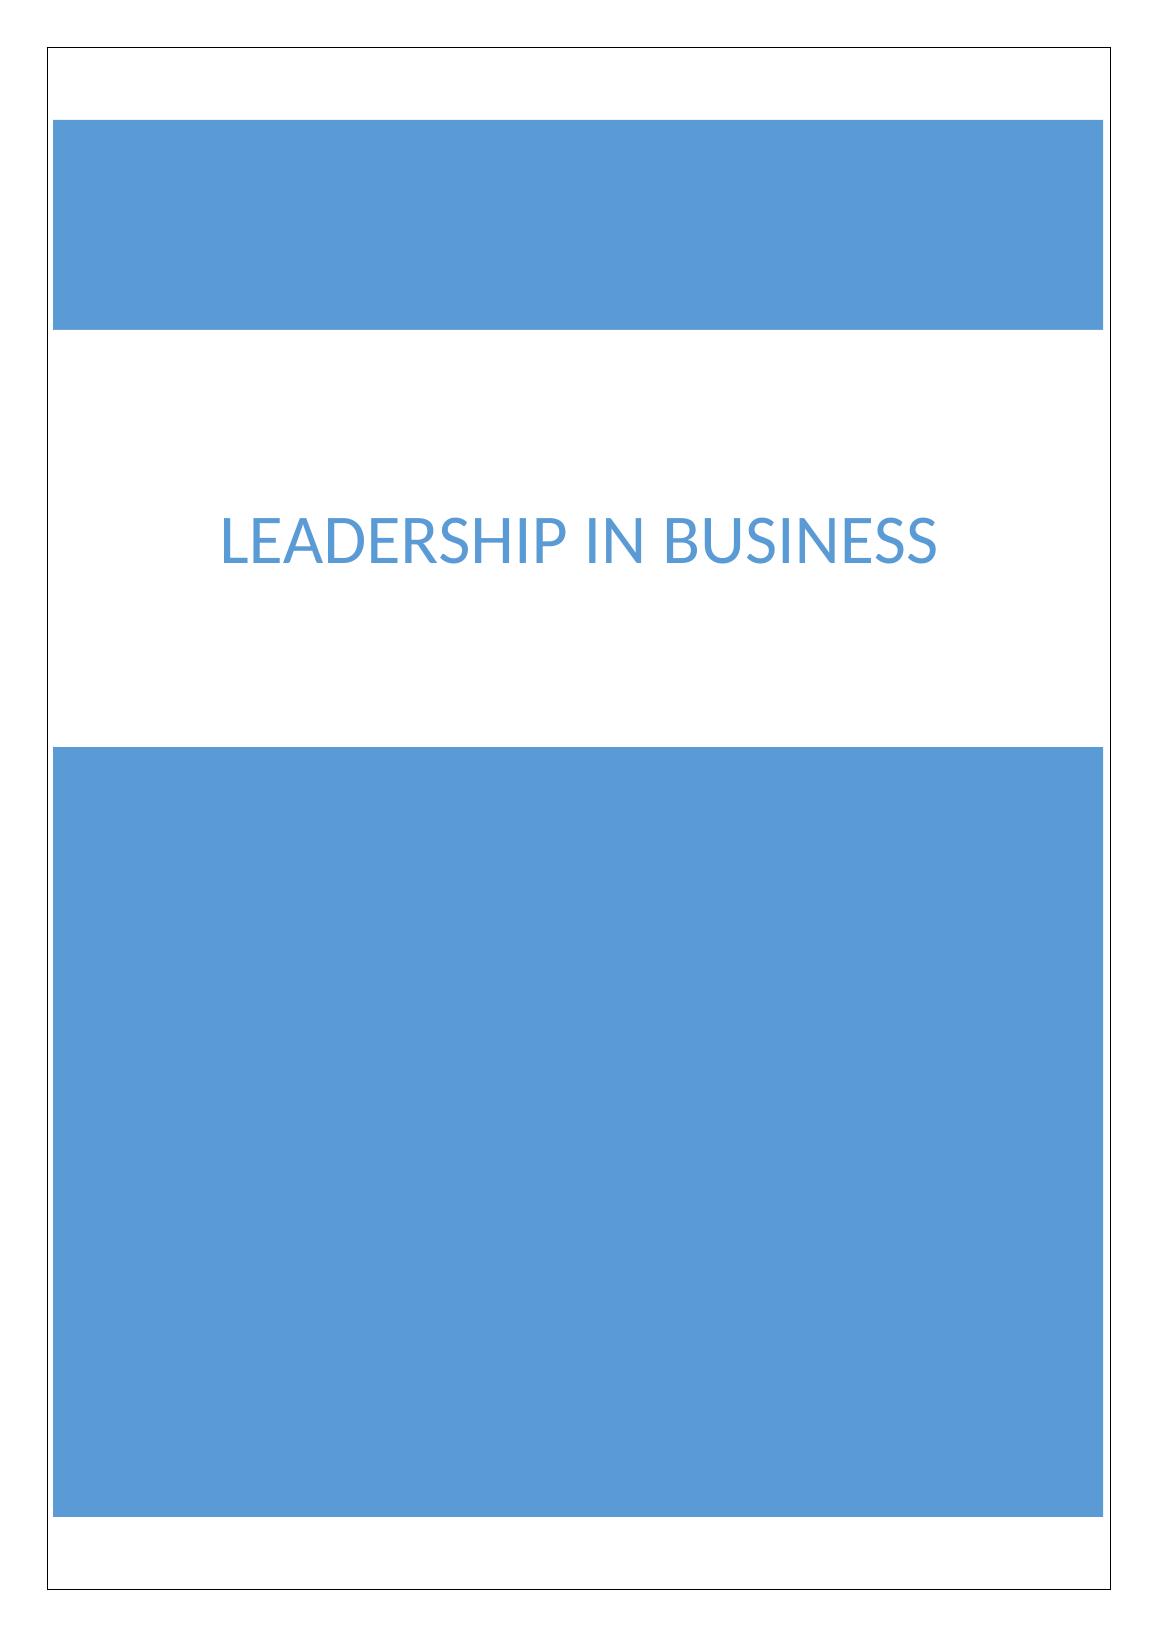 Leadership in Business Report 2022_1